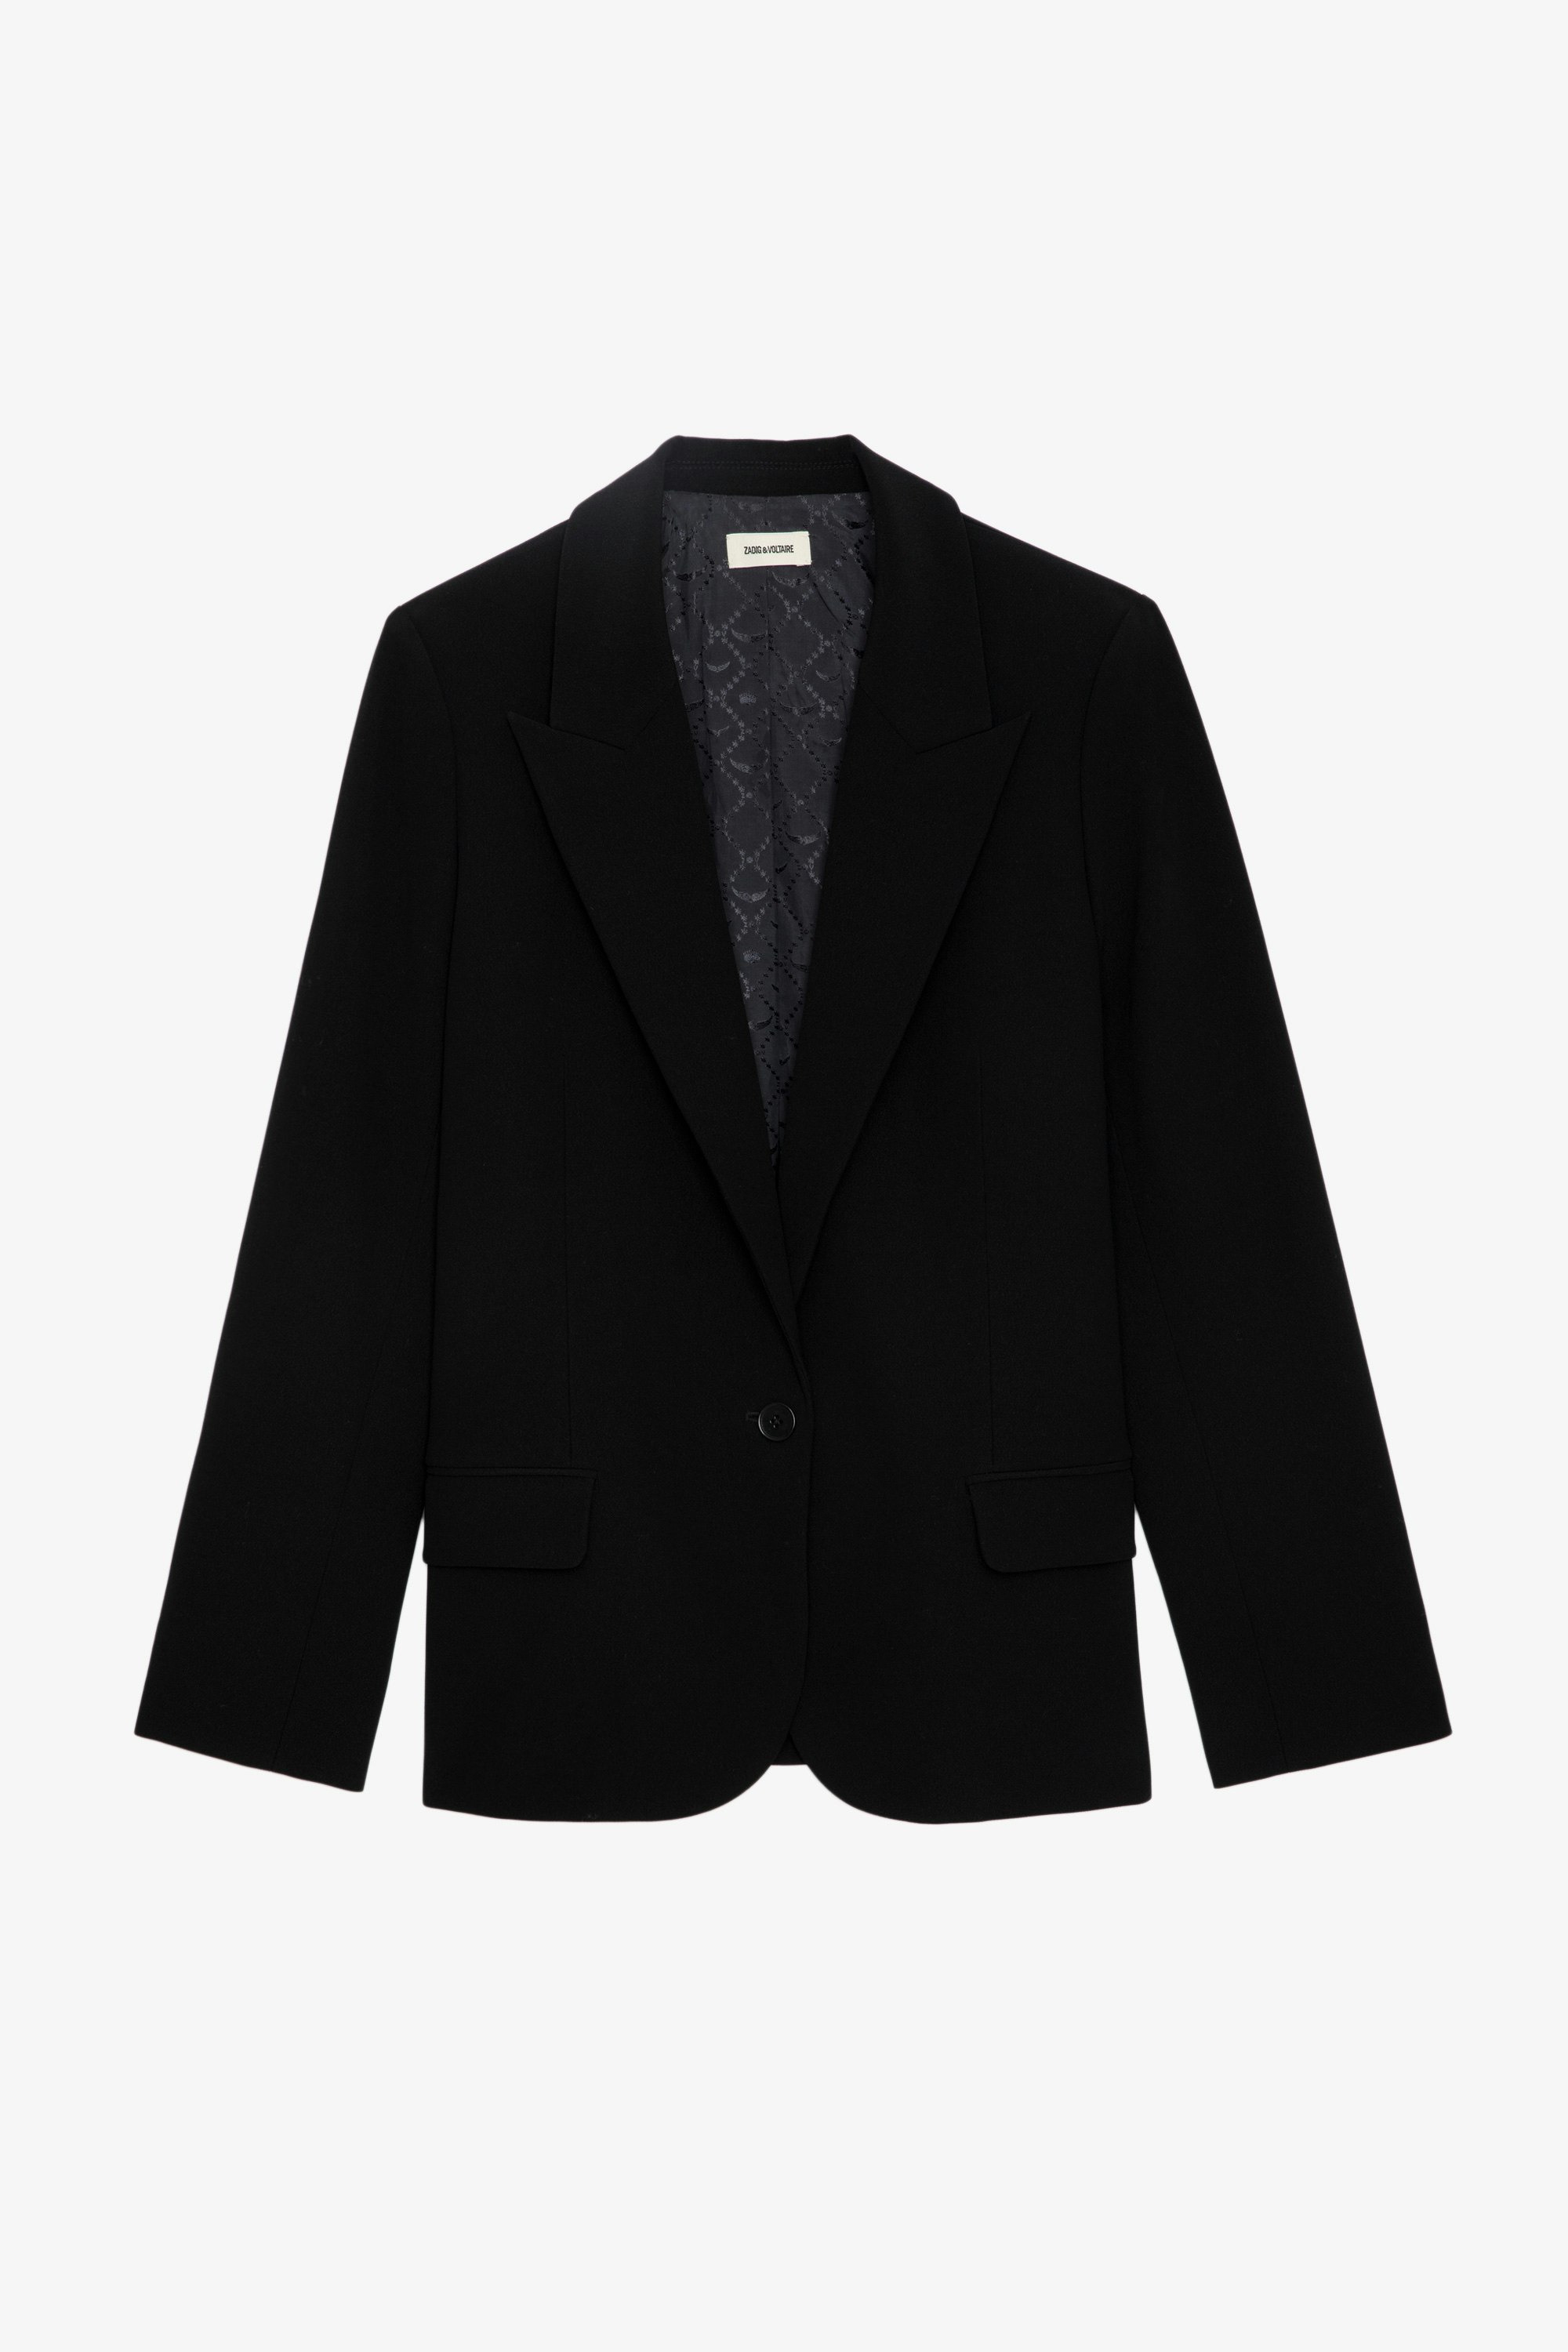 Voyage Blazer - Black oversized blazer with pointed collar, button closure and pockets.